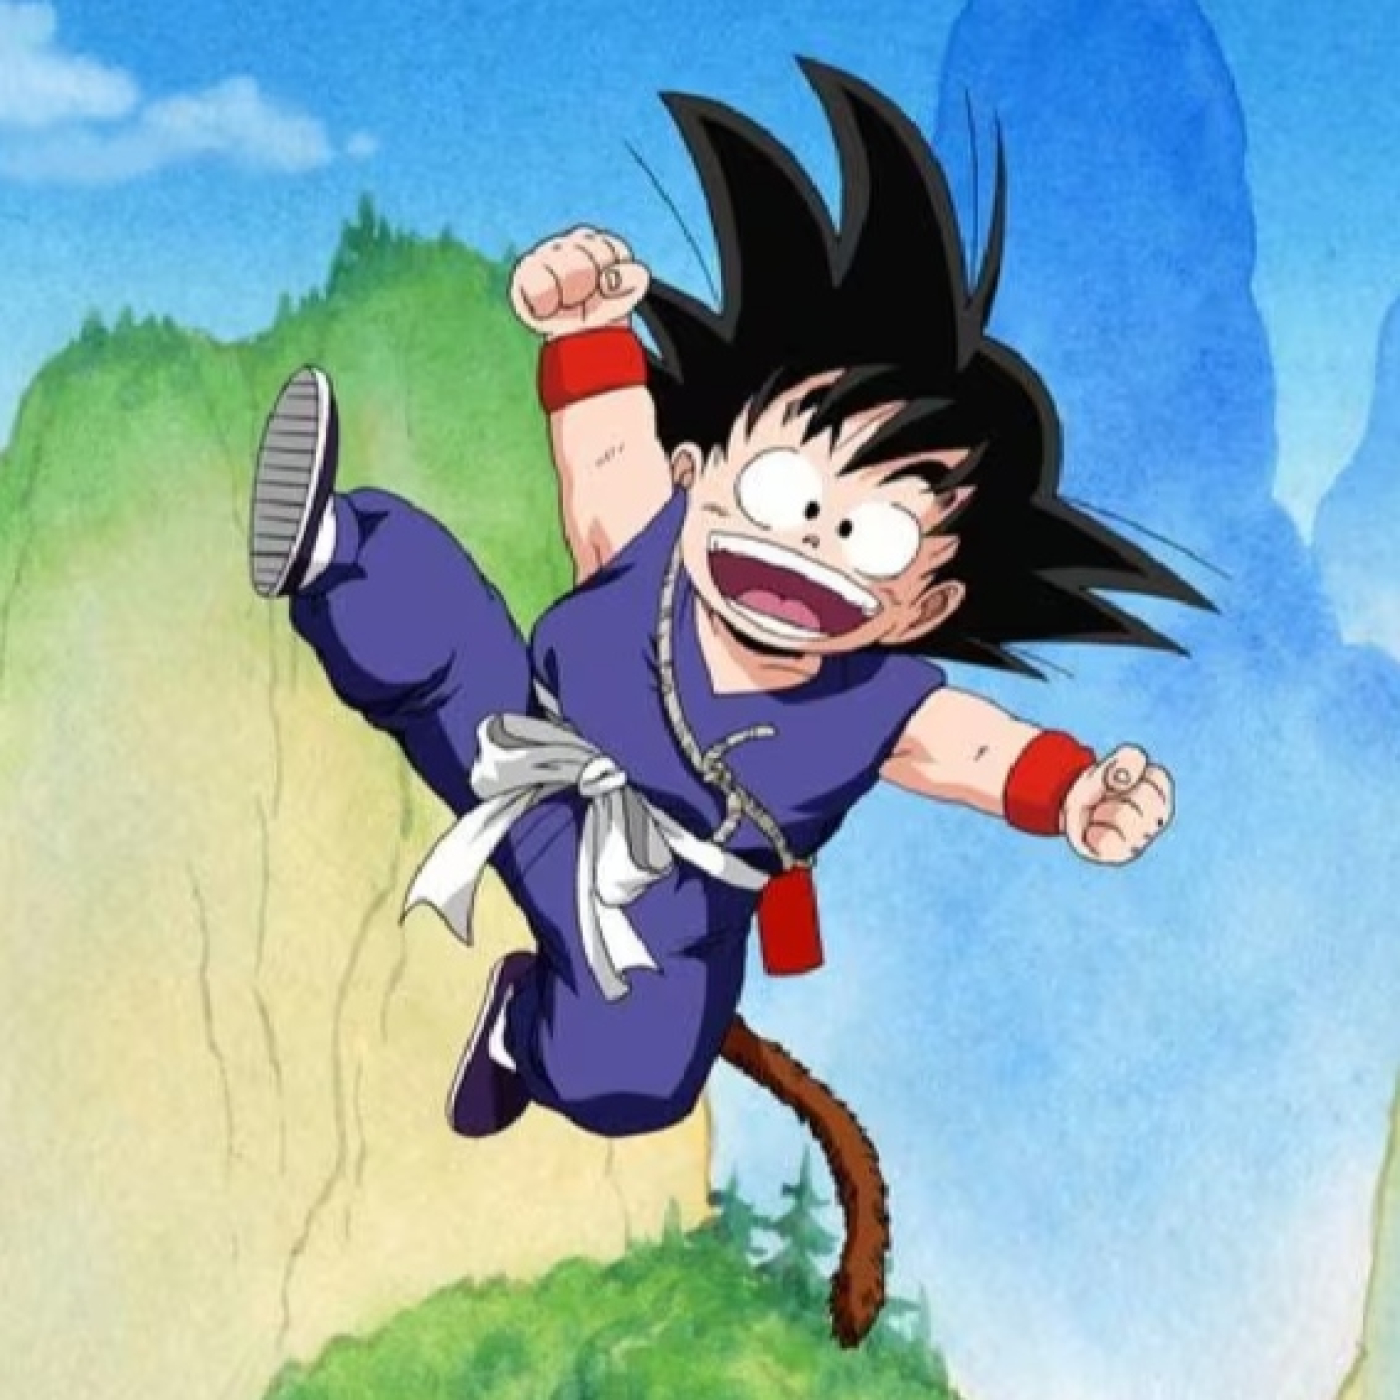 Son Goku (Héroes de Leyenda) - HdG 2.0 - Episodio exclusivo para mecenas